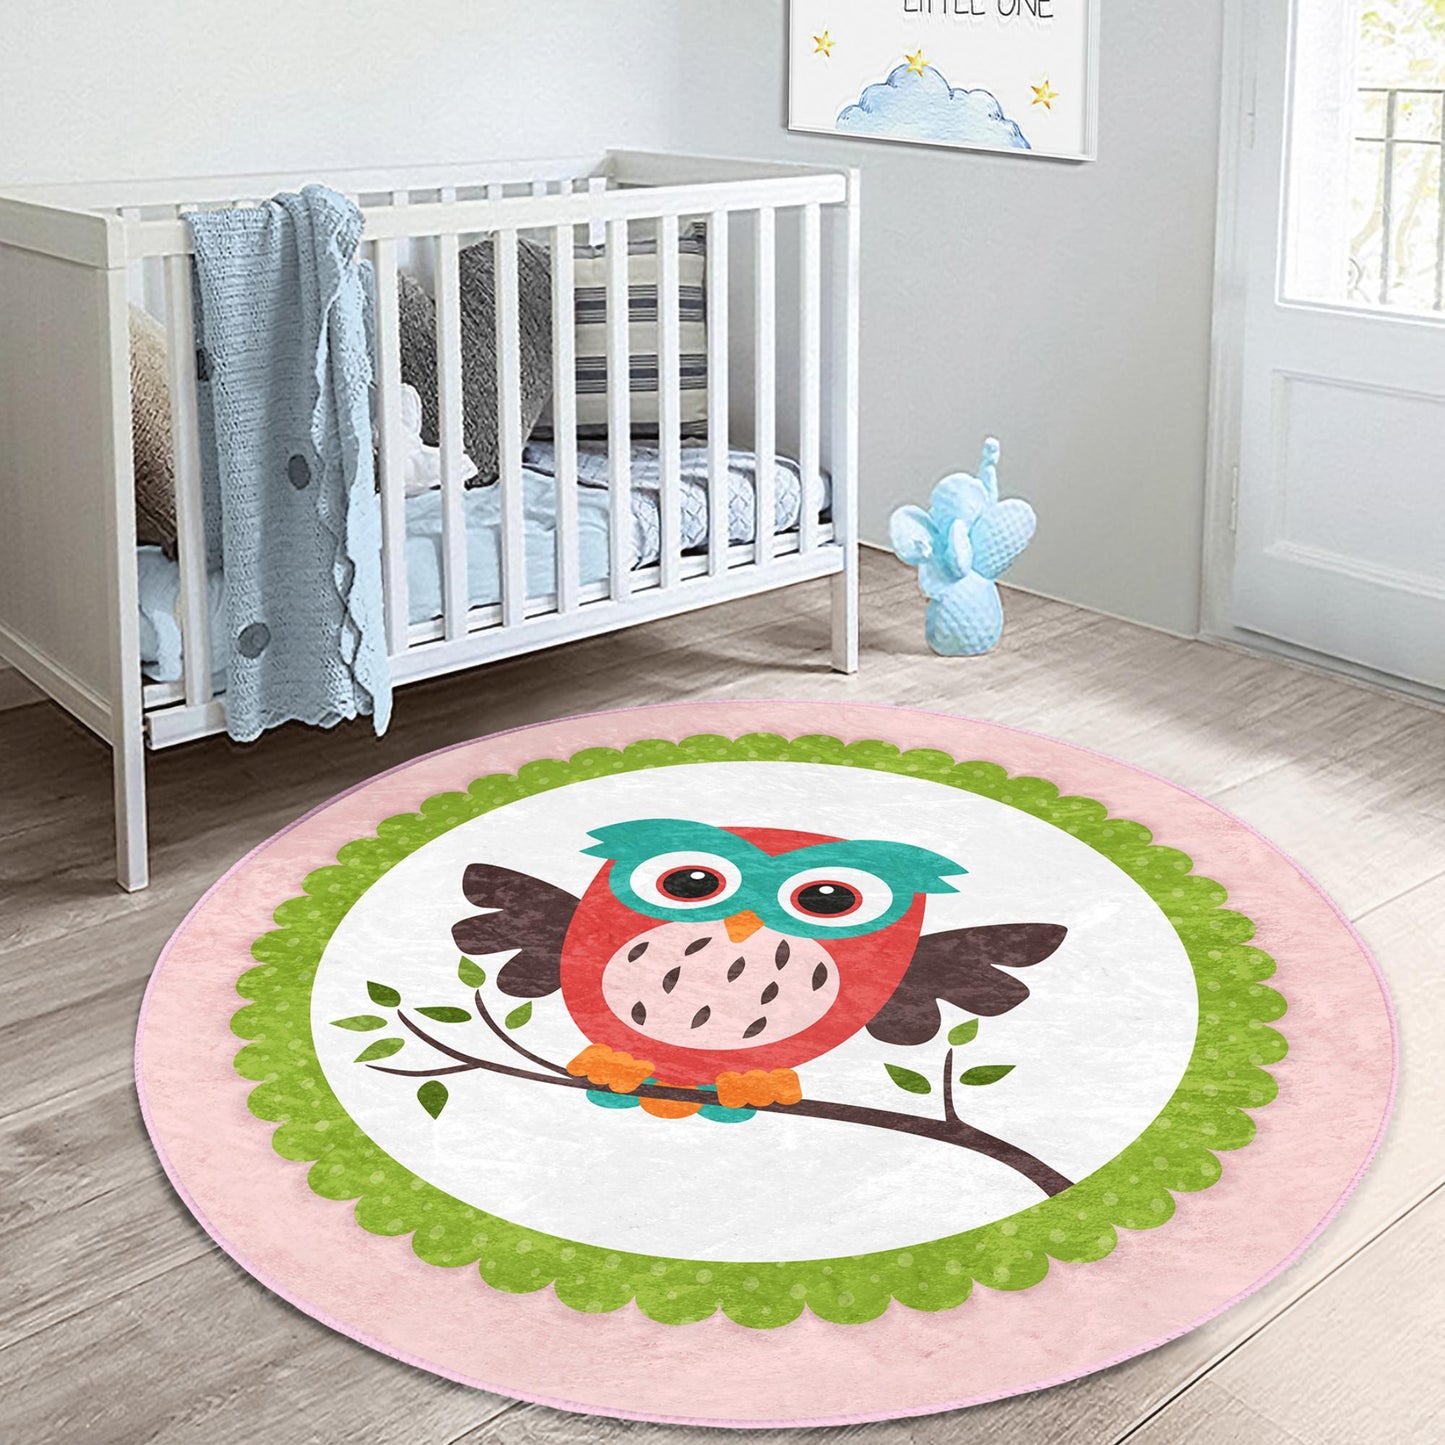 Adorable baby owl-themed kids rug for nursery decor.